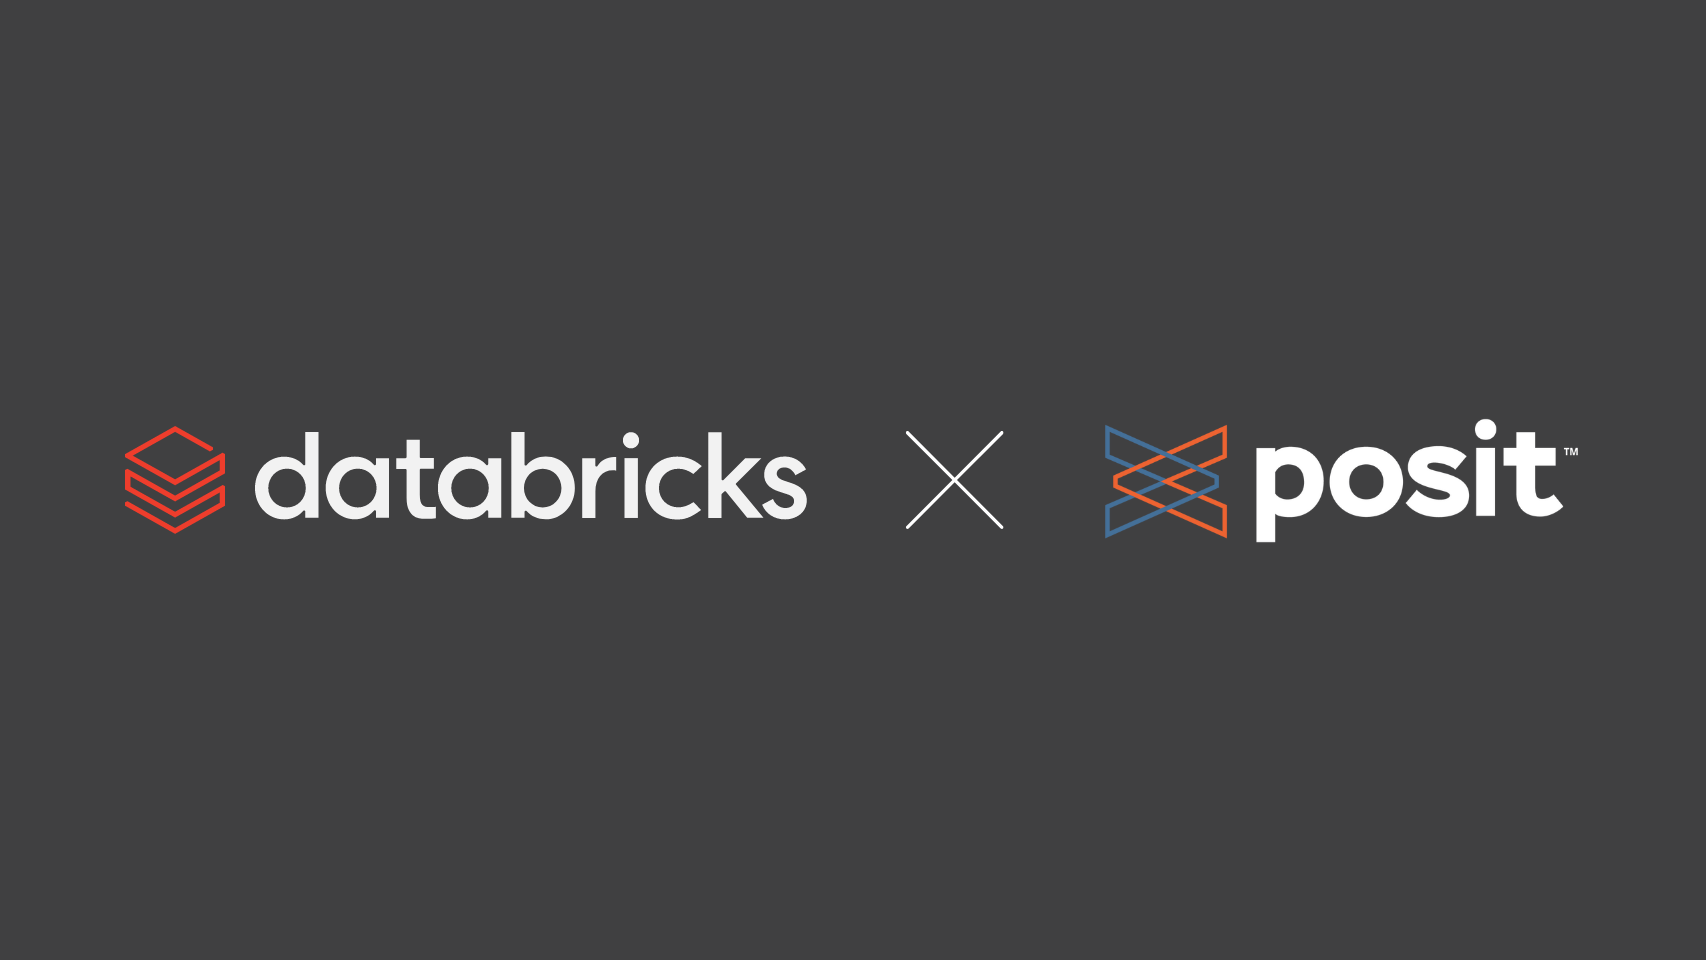 Databricks logo x Posit logo